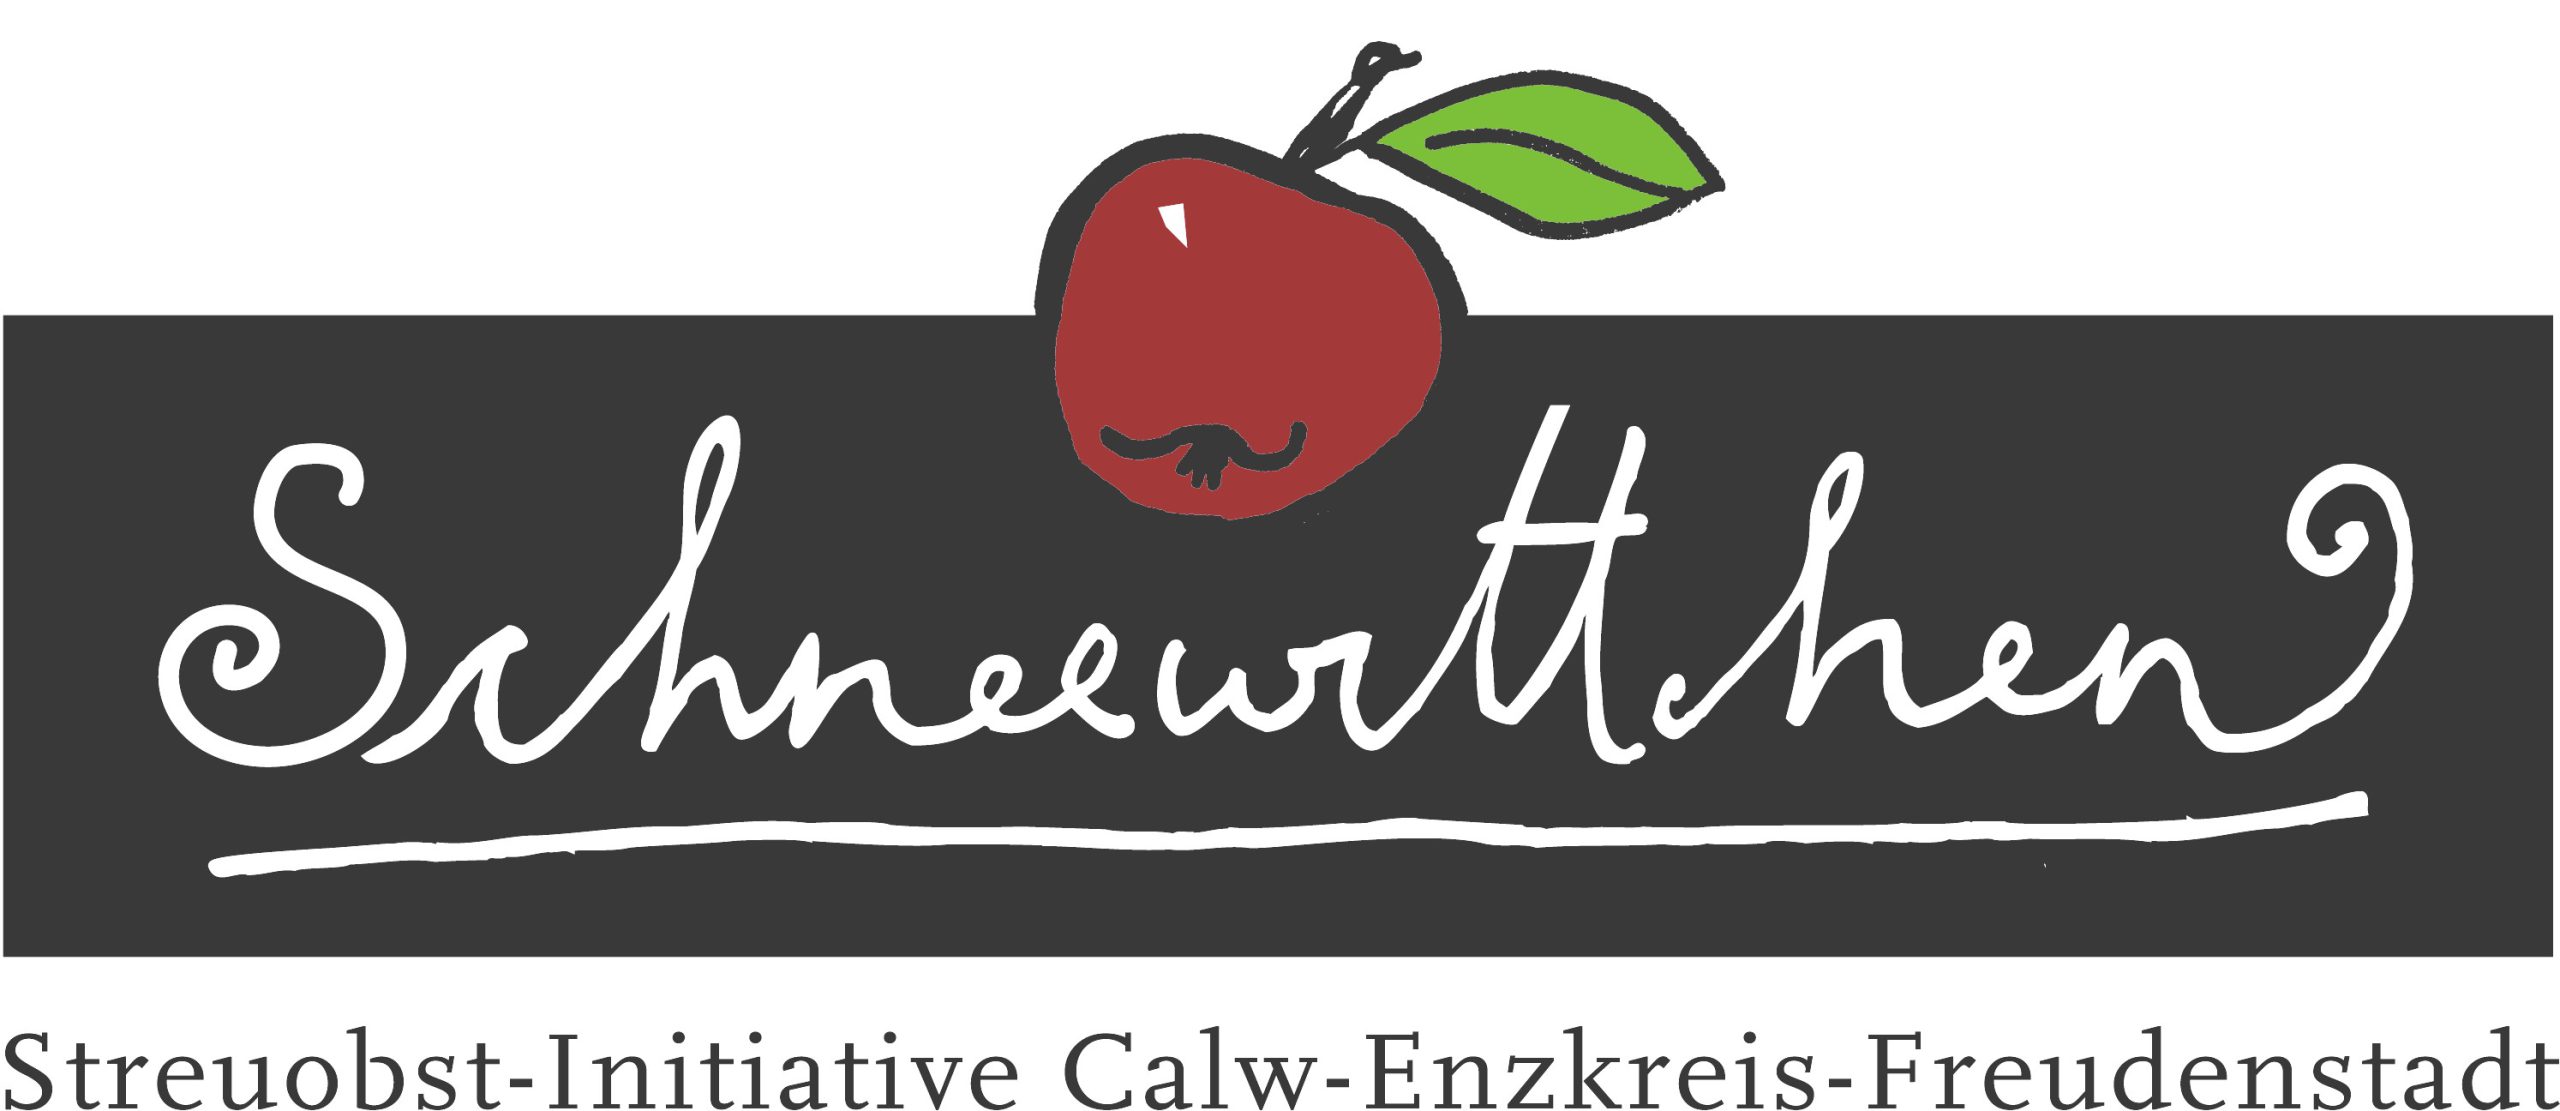 Streuobst Initiative Calw Enzkreis Freudenstadt